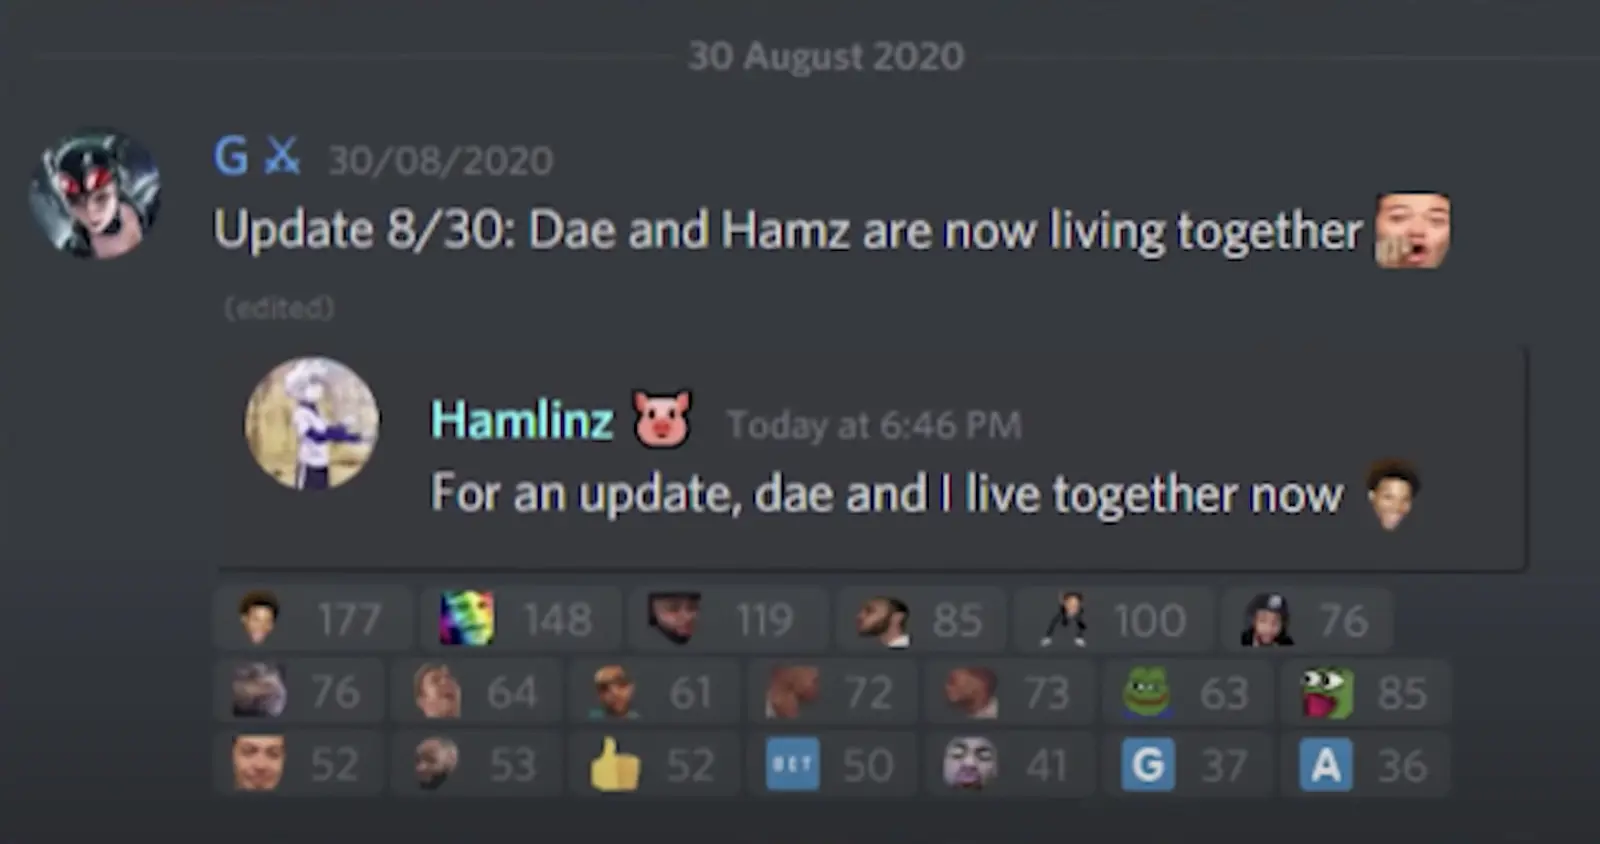 Discord message from Hamlinz